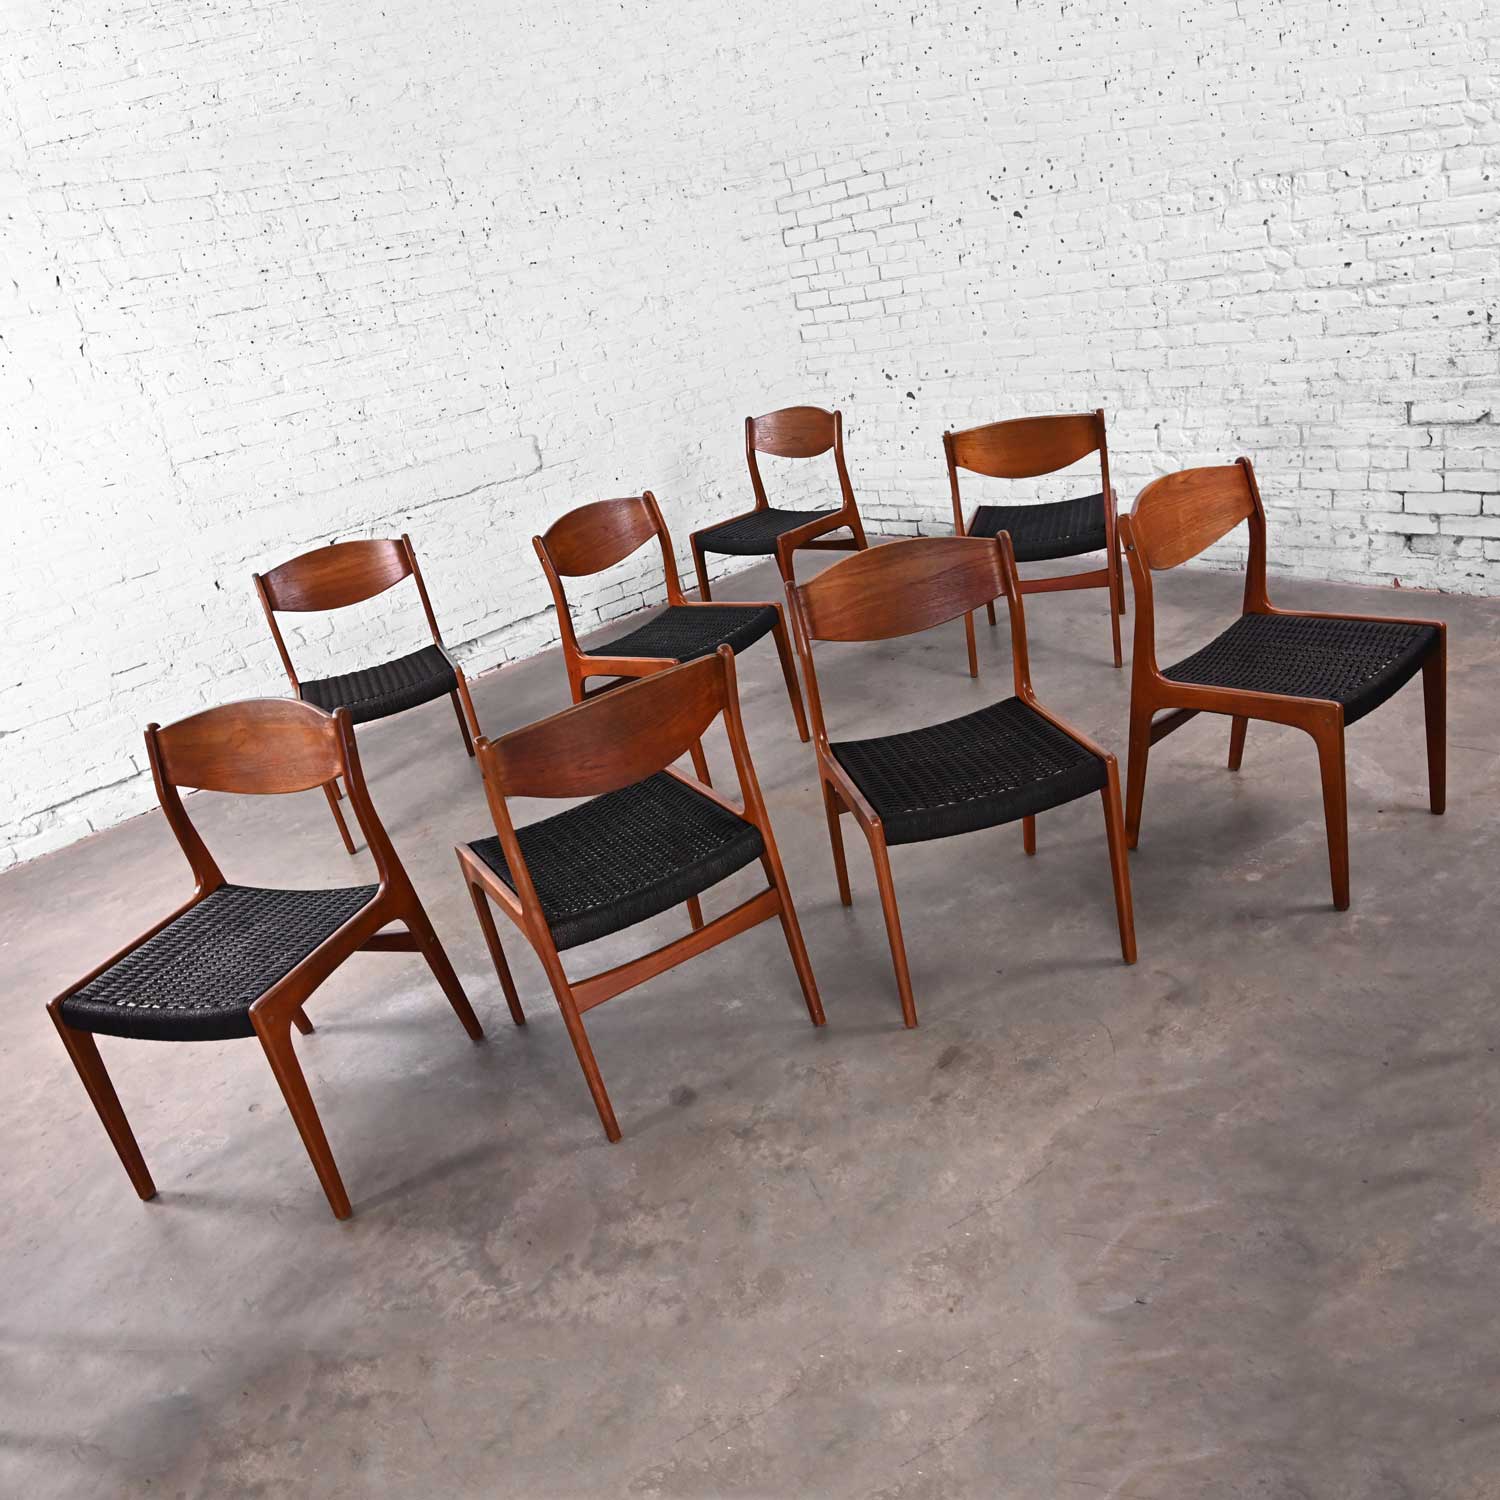 Mid-20th Century Scandinavian Modern Teak Dining Chairs with Black Cord Seats Set of 8